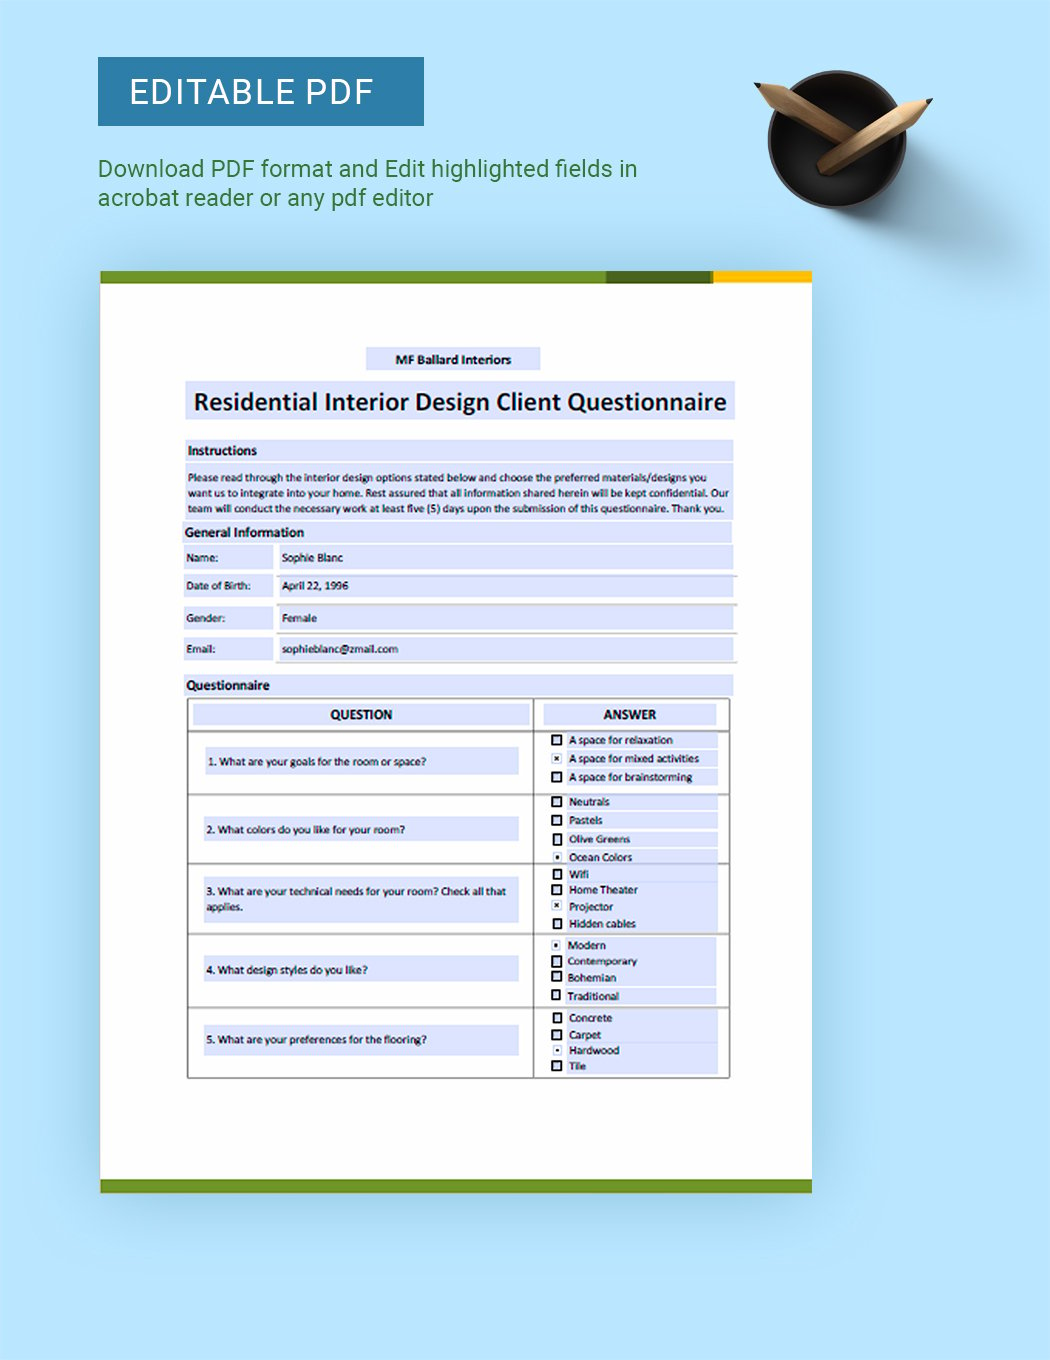 Residential Interior Design Client Questionnaire - Google Docs, Google